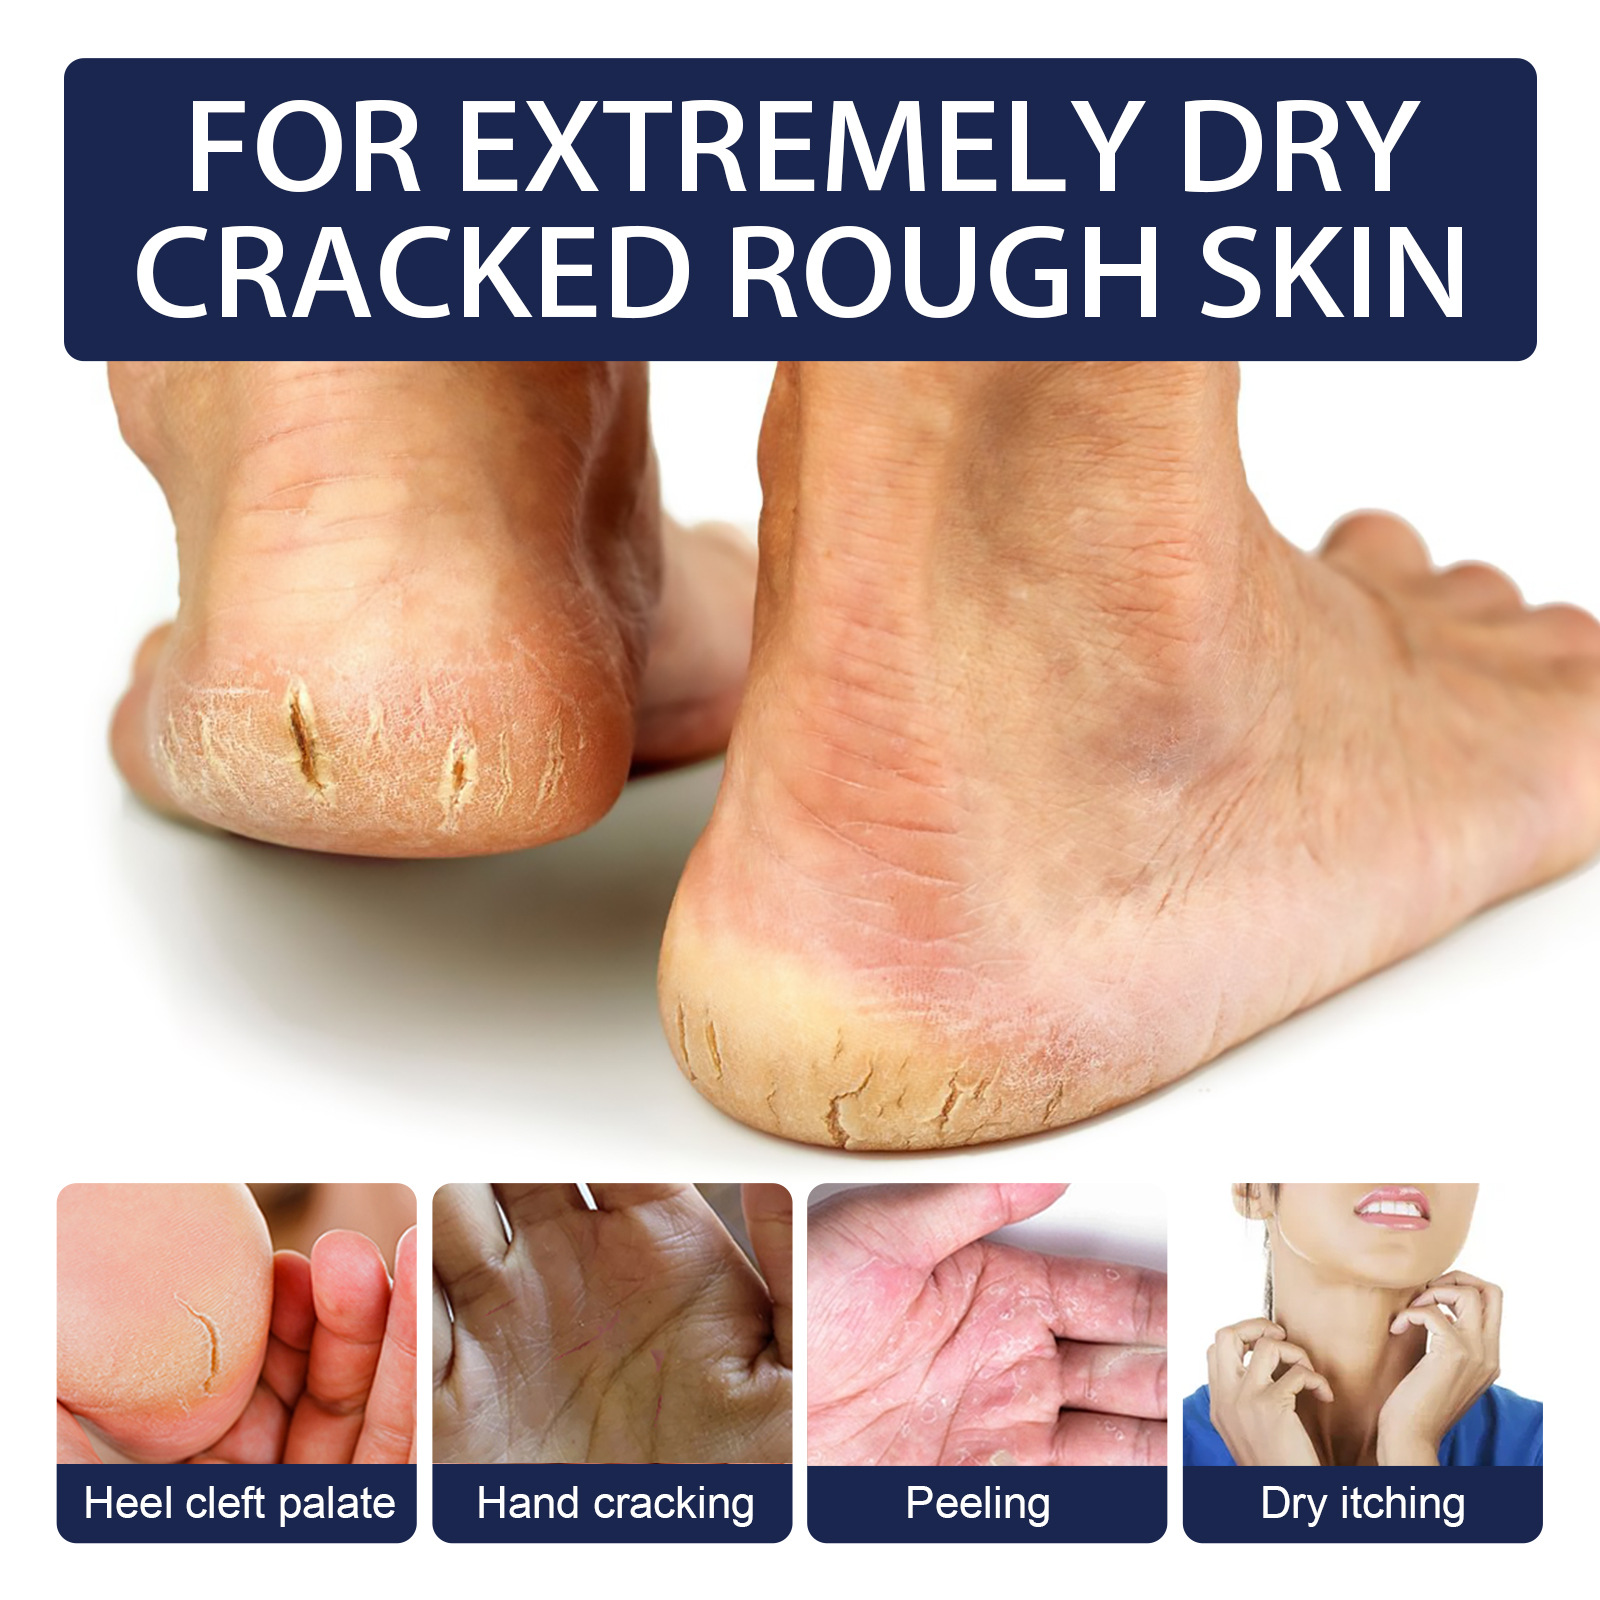 Jaysuing Anti-Cracking Repair Hand Cream Moisturizing Exfoliating Skin Improve Cracking Rough Skin Hydrating Hand Cream